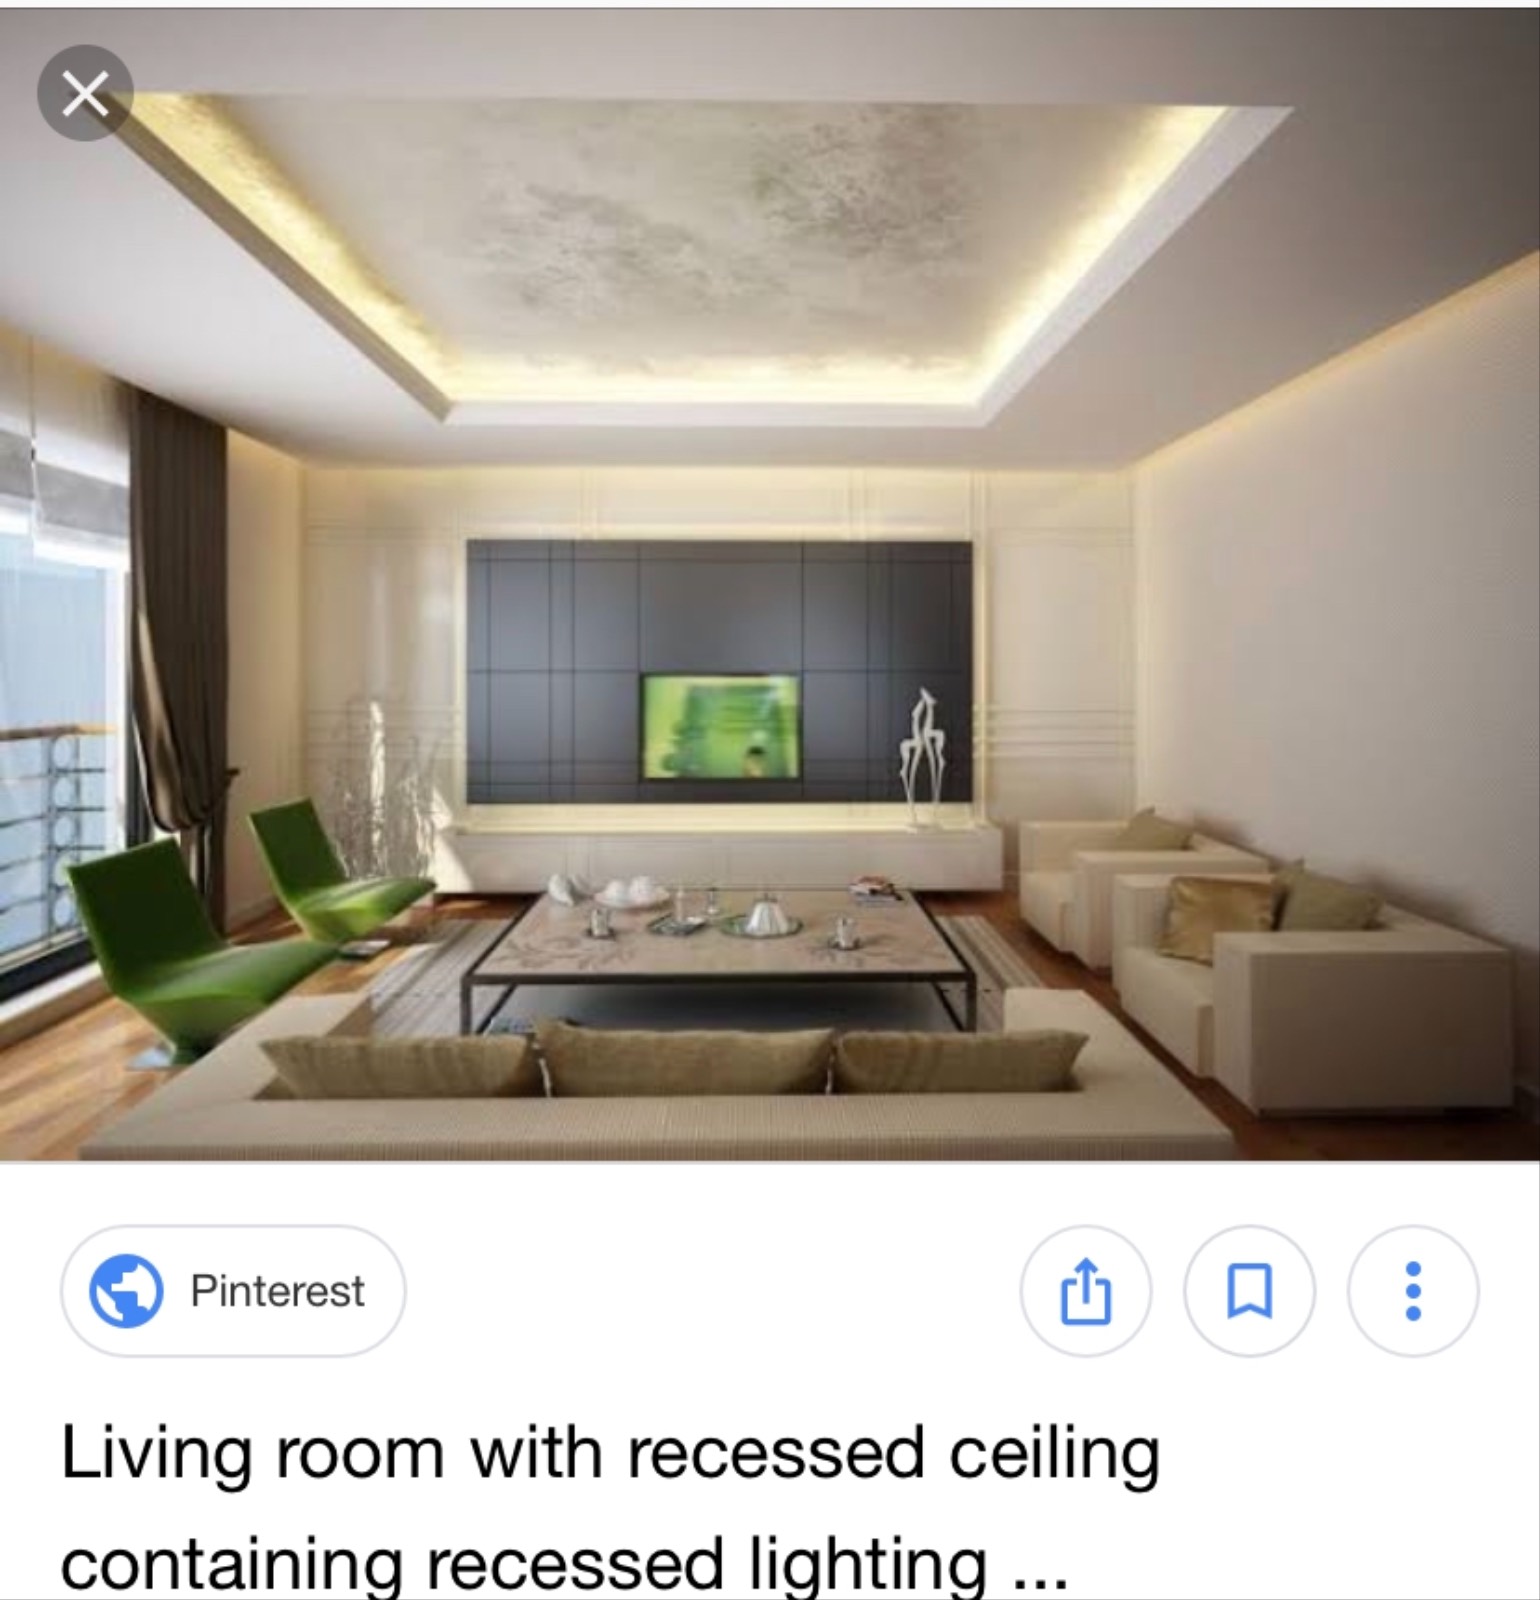 Recessed ceiling cost